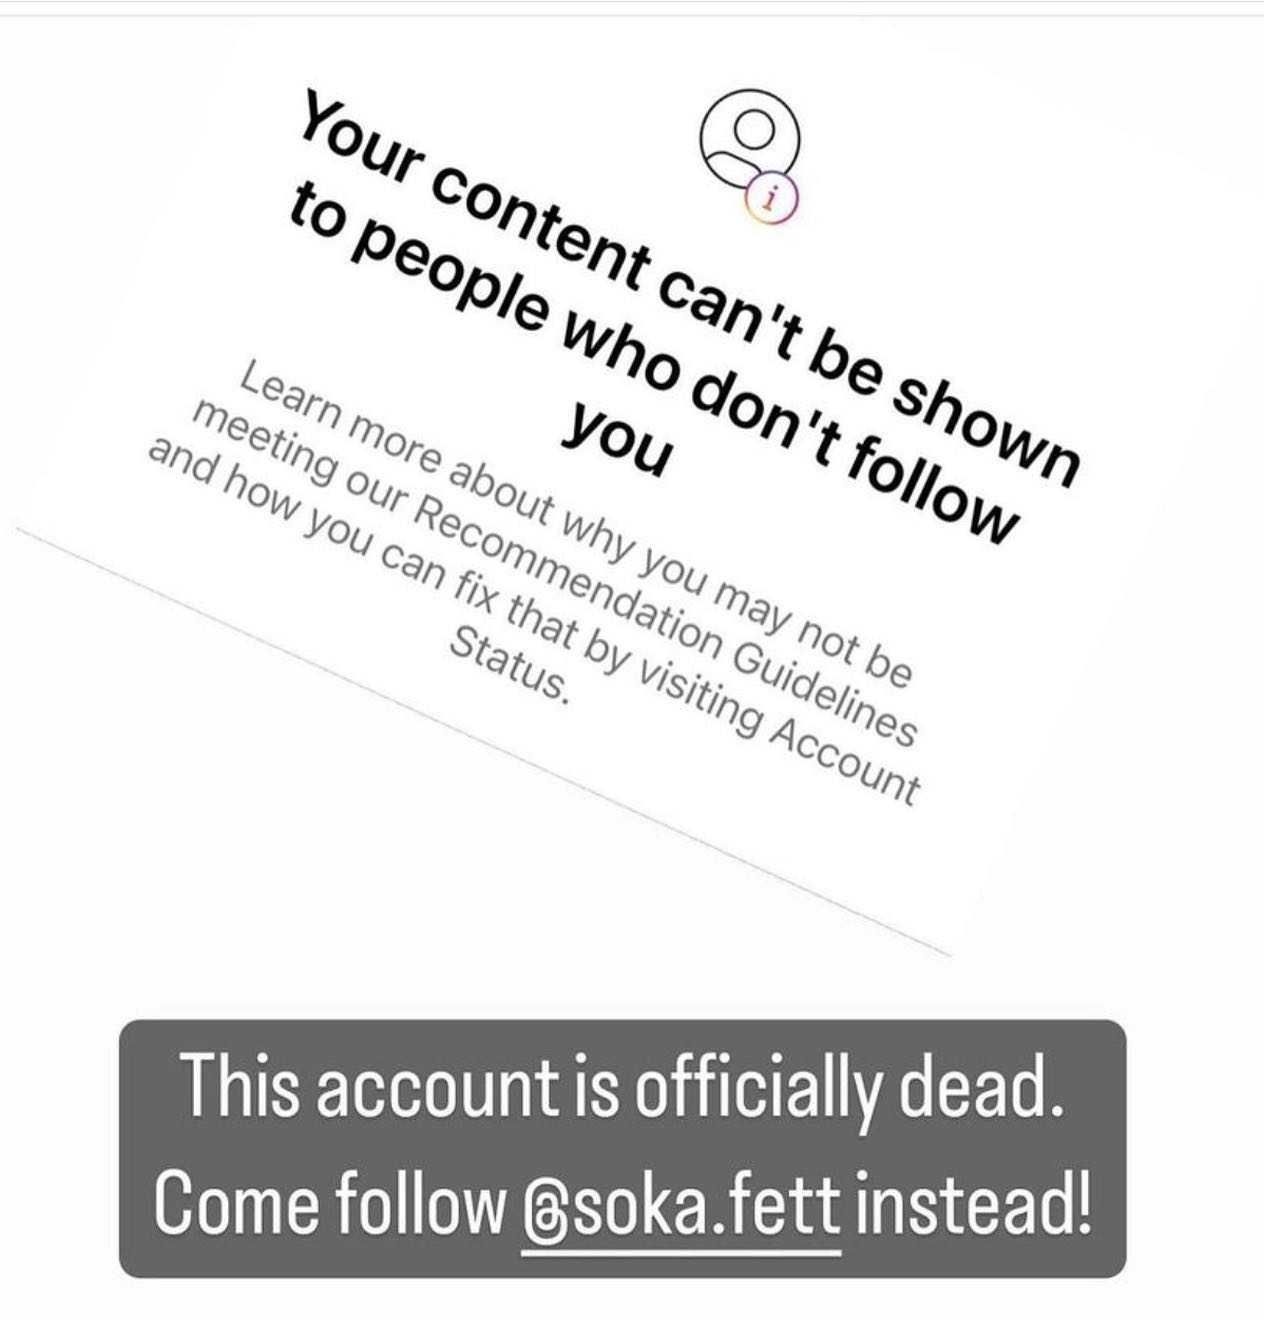 Be sure you’re following @soka.fett